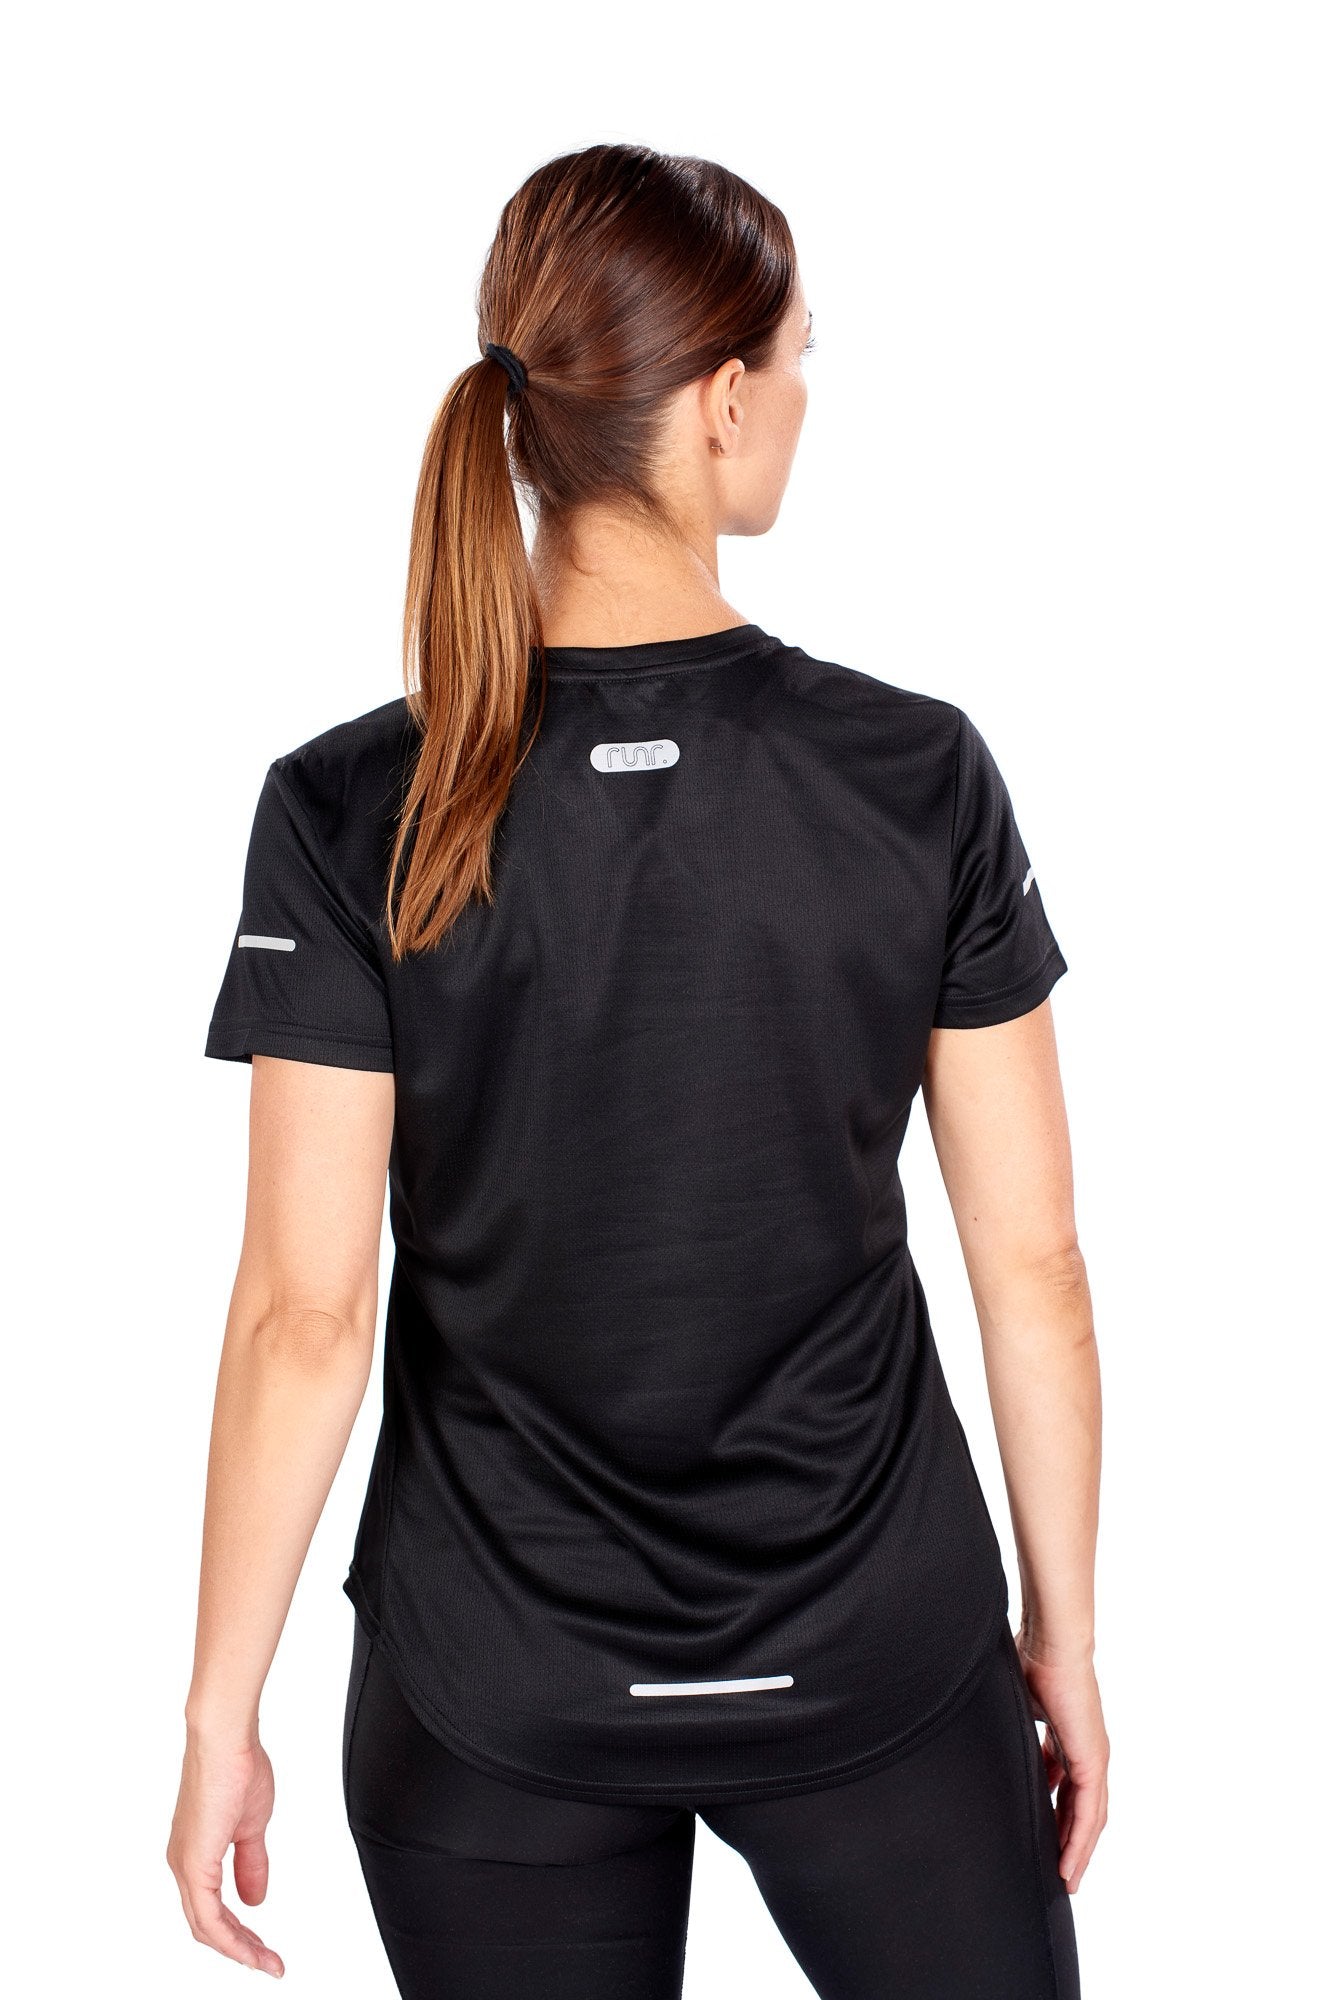 Women's EcoTek Runr Technical T-Shirt - Black